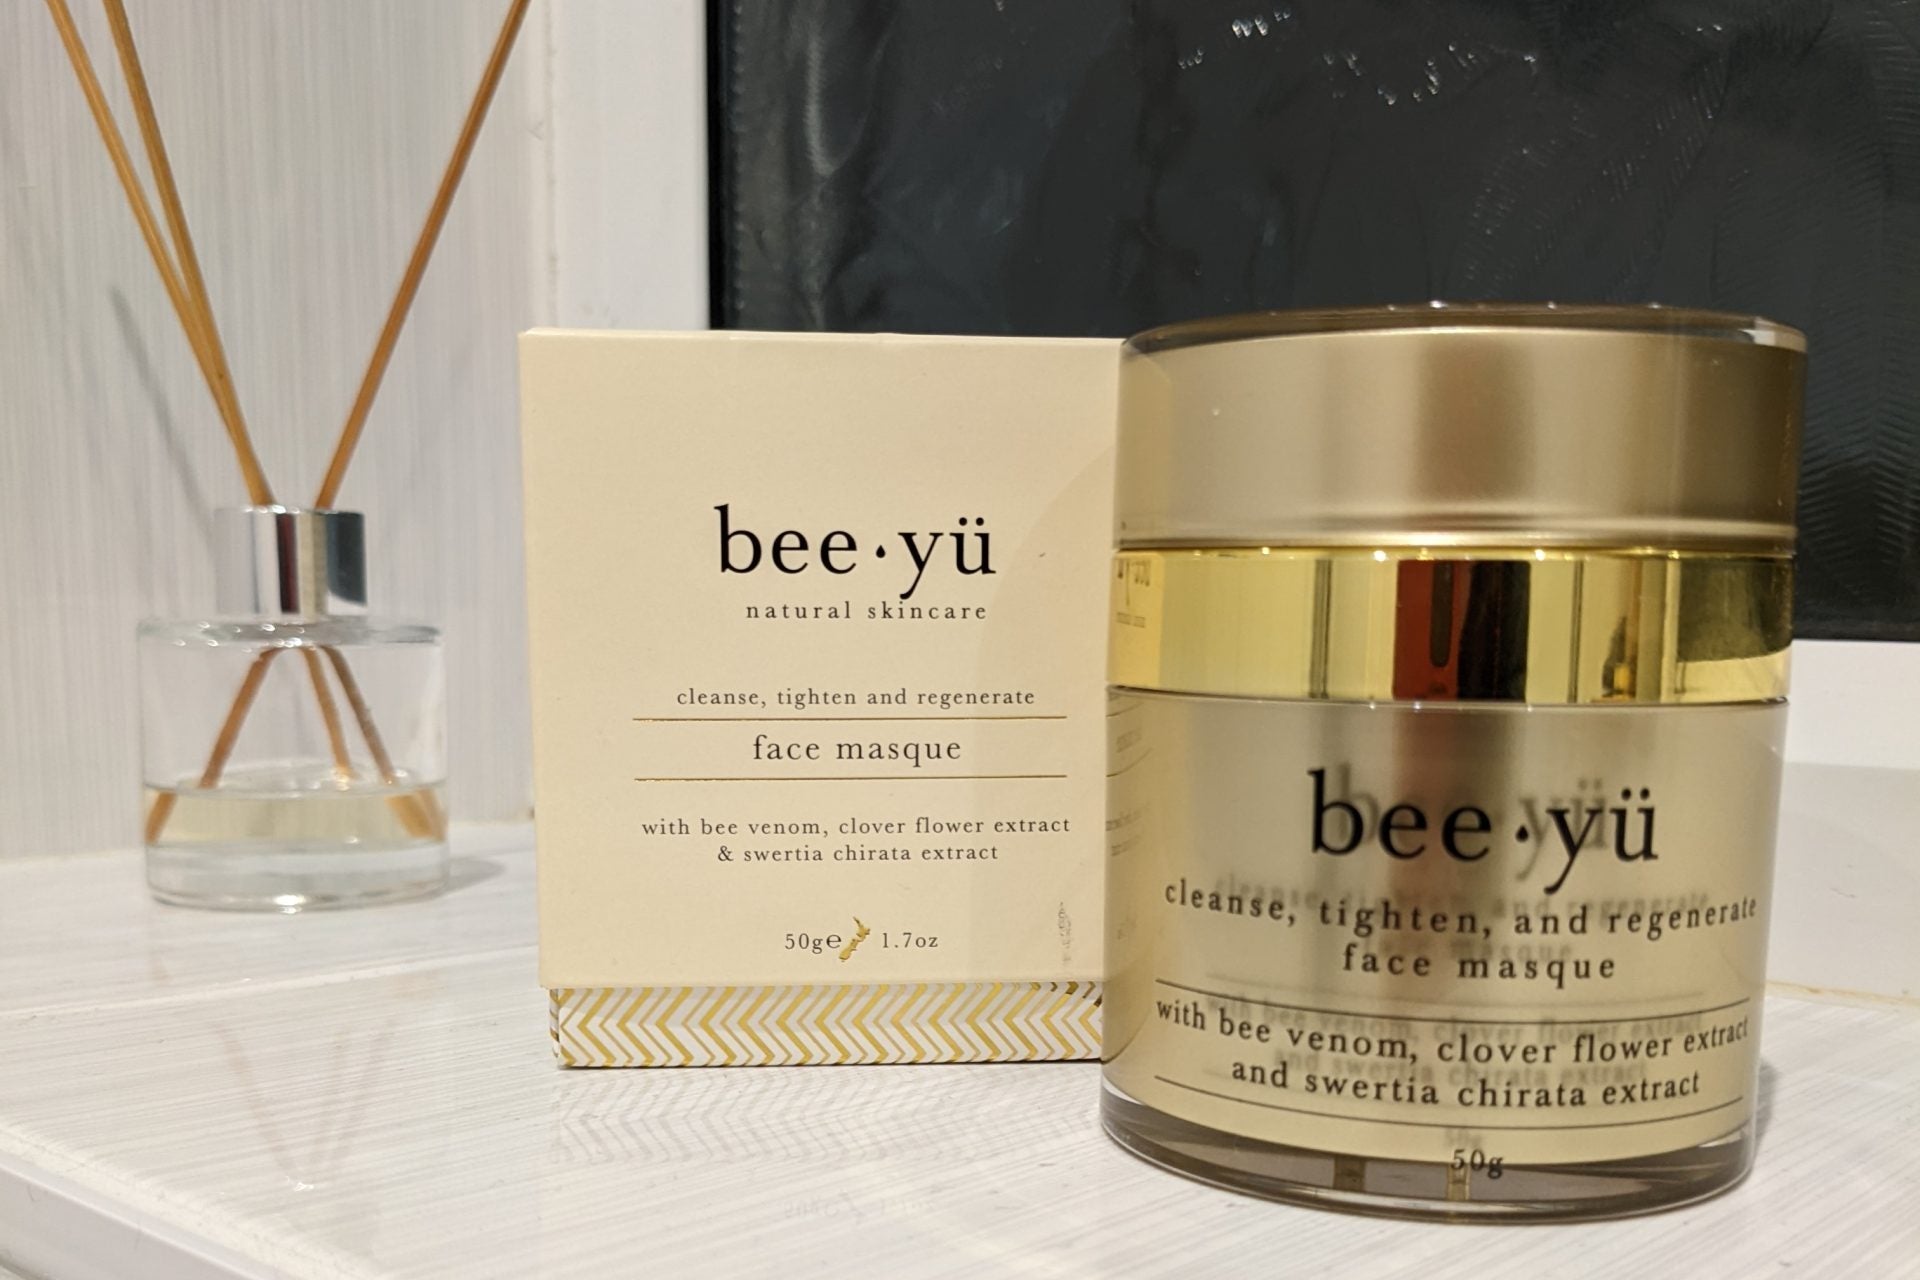 HOW TO APPLY THE BEE-YU MANUKA HONEY FACE MASQUE - Manuka Honey Direct